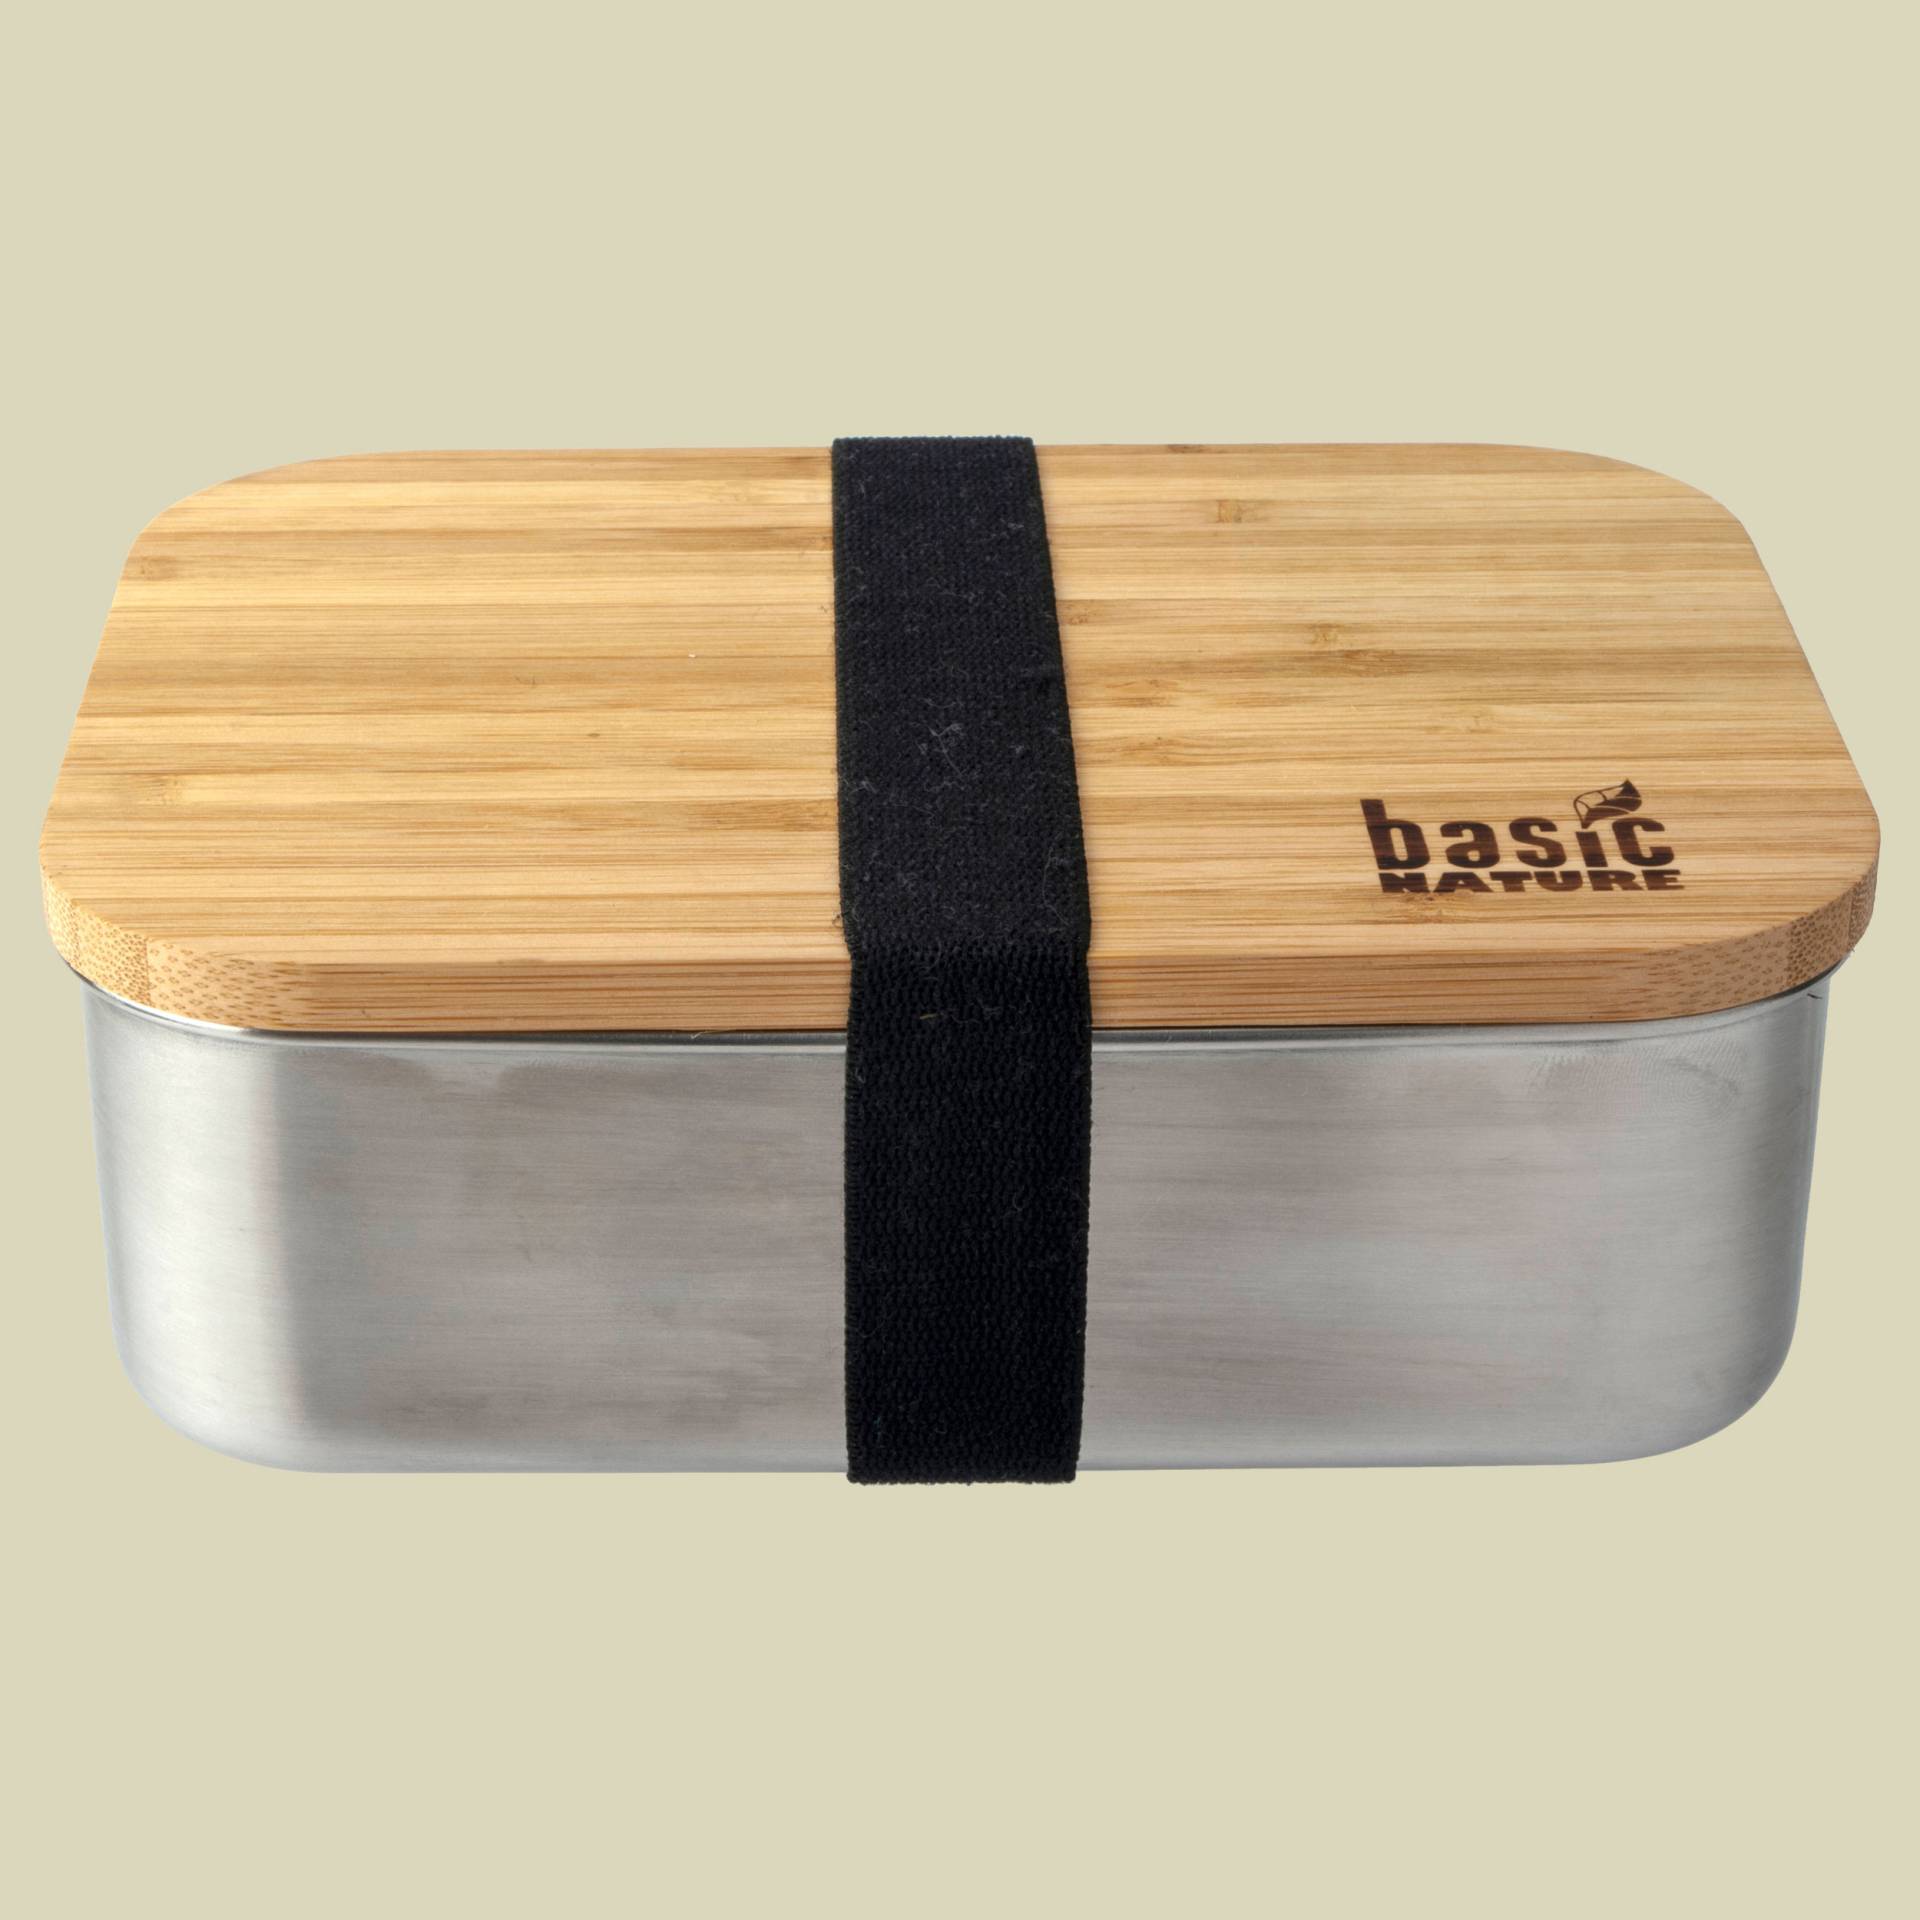 BasicNature Lunchbox Bamboo Volumen 1,2 L Farbe edelstahl von Basic Nature